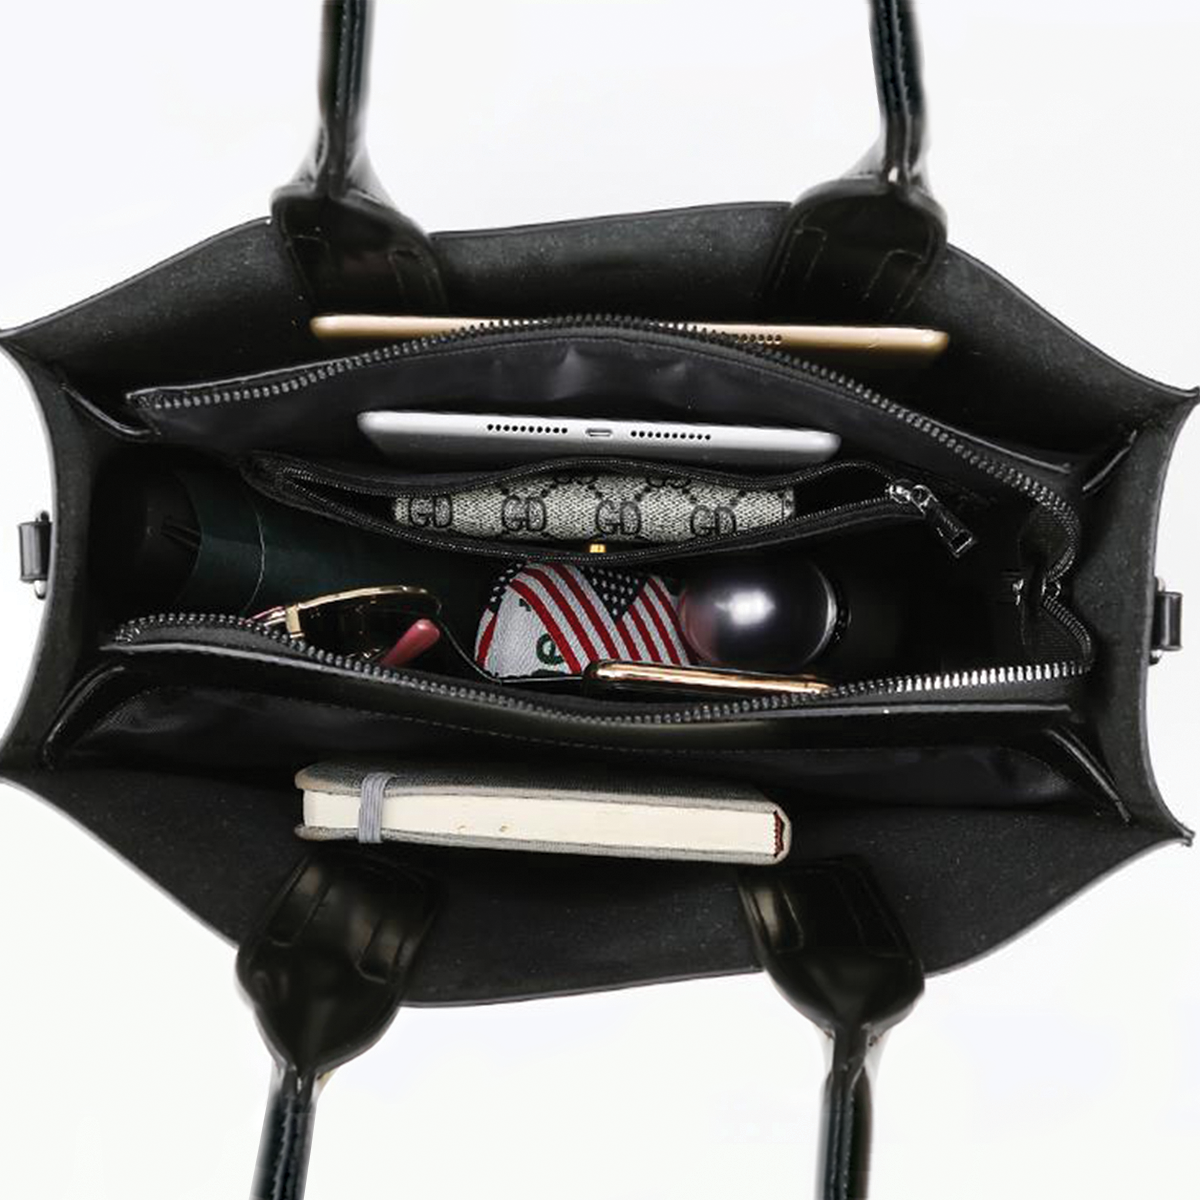 Reduce Stress At Work With Golden Retriever - Luxury Handbag V1